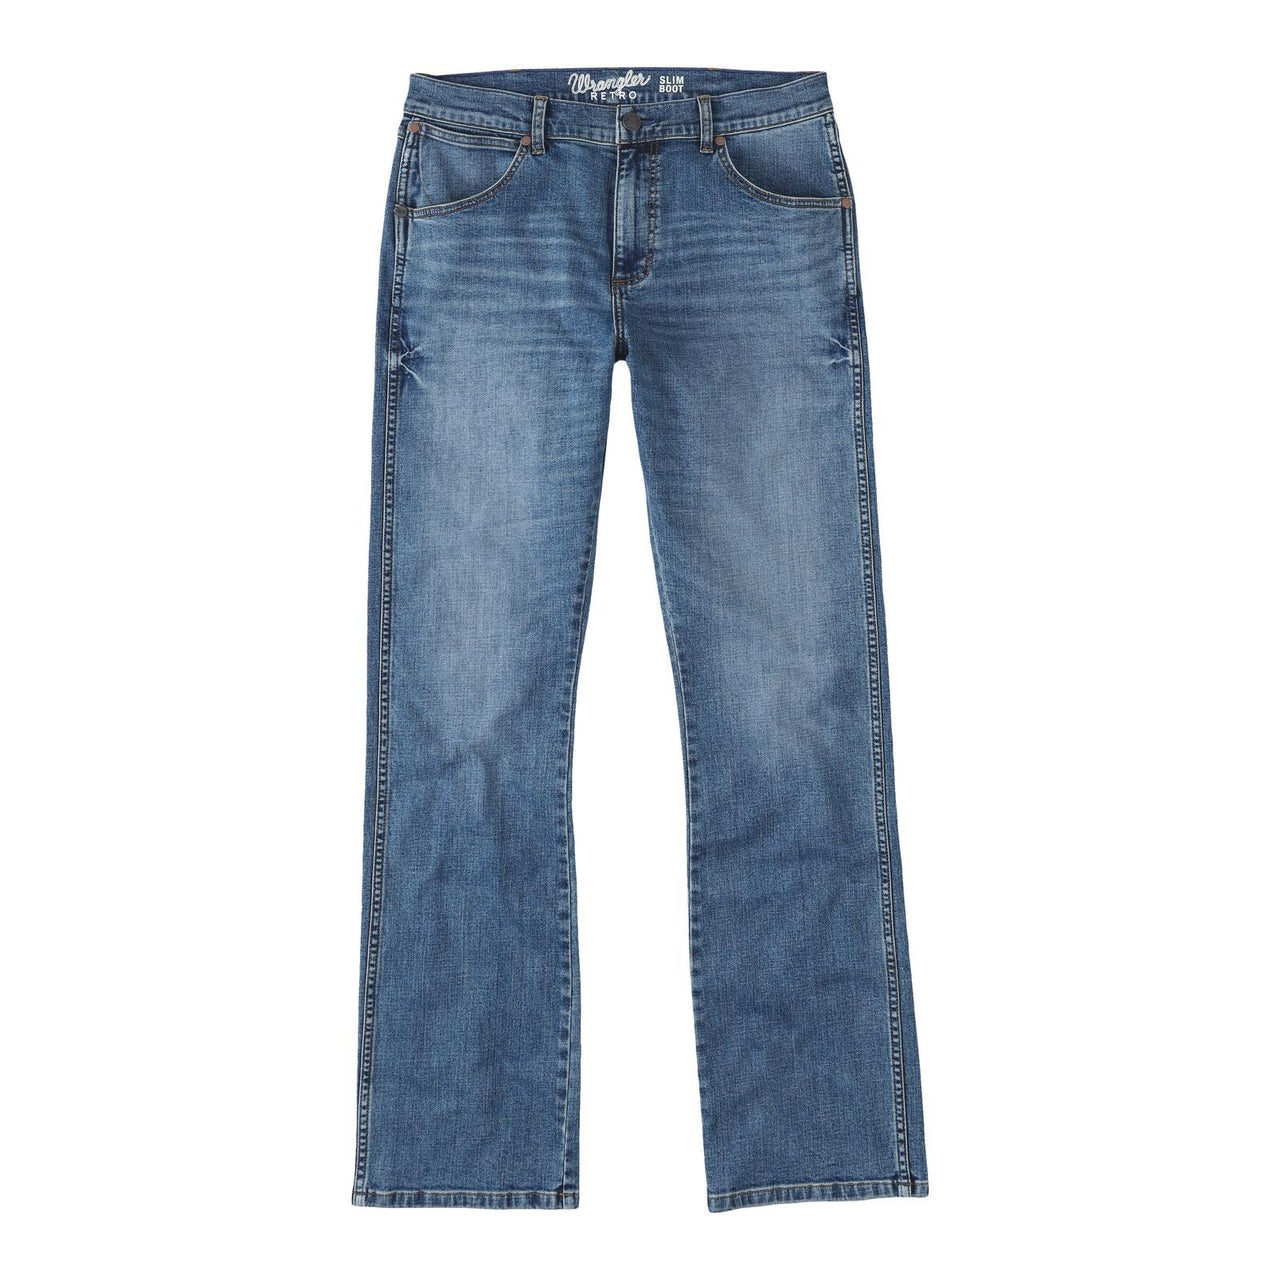 Wrangler Men's Retro Slim Bootcut Jeans - Oleson